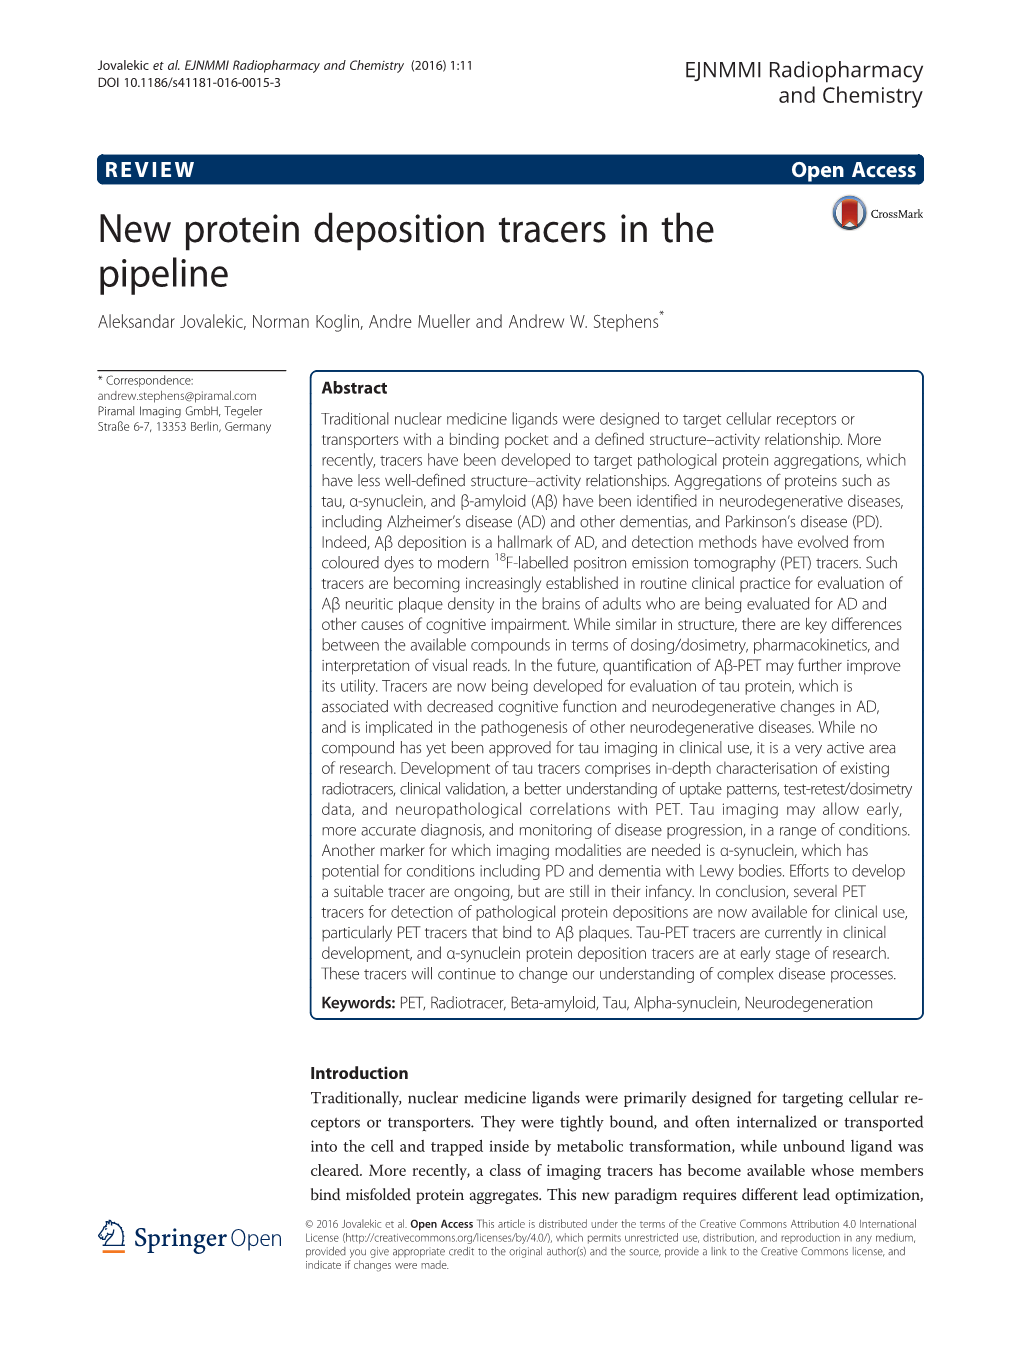 New Protein Deposition Tracers in the Pipeline Aleksandar Jovalekic, Norman Koglin, Andre Mueller and Andrew W